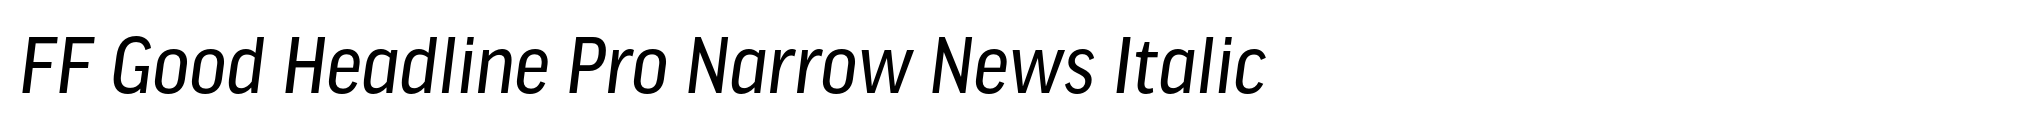 FF Good Headline Pro Narrow News Italic image